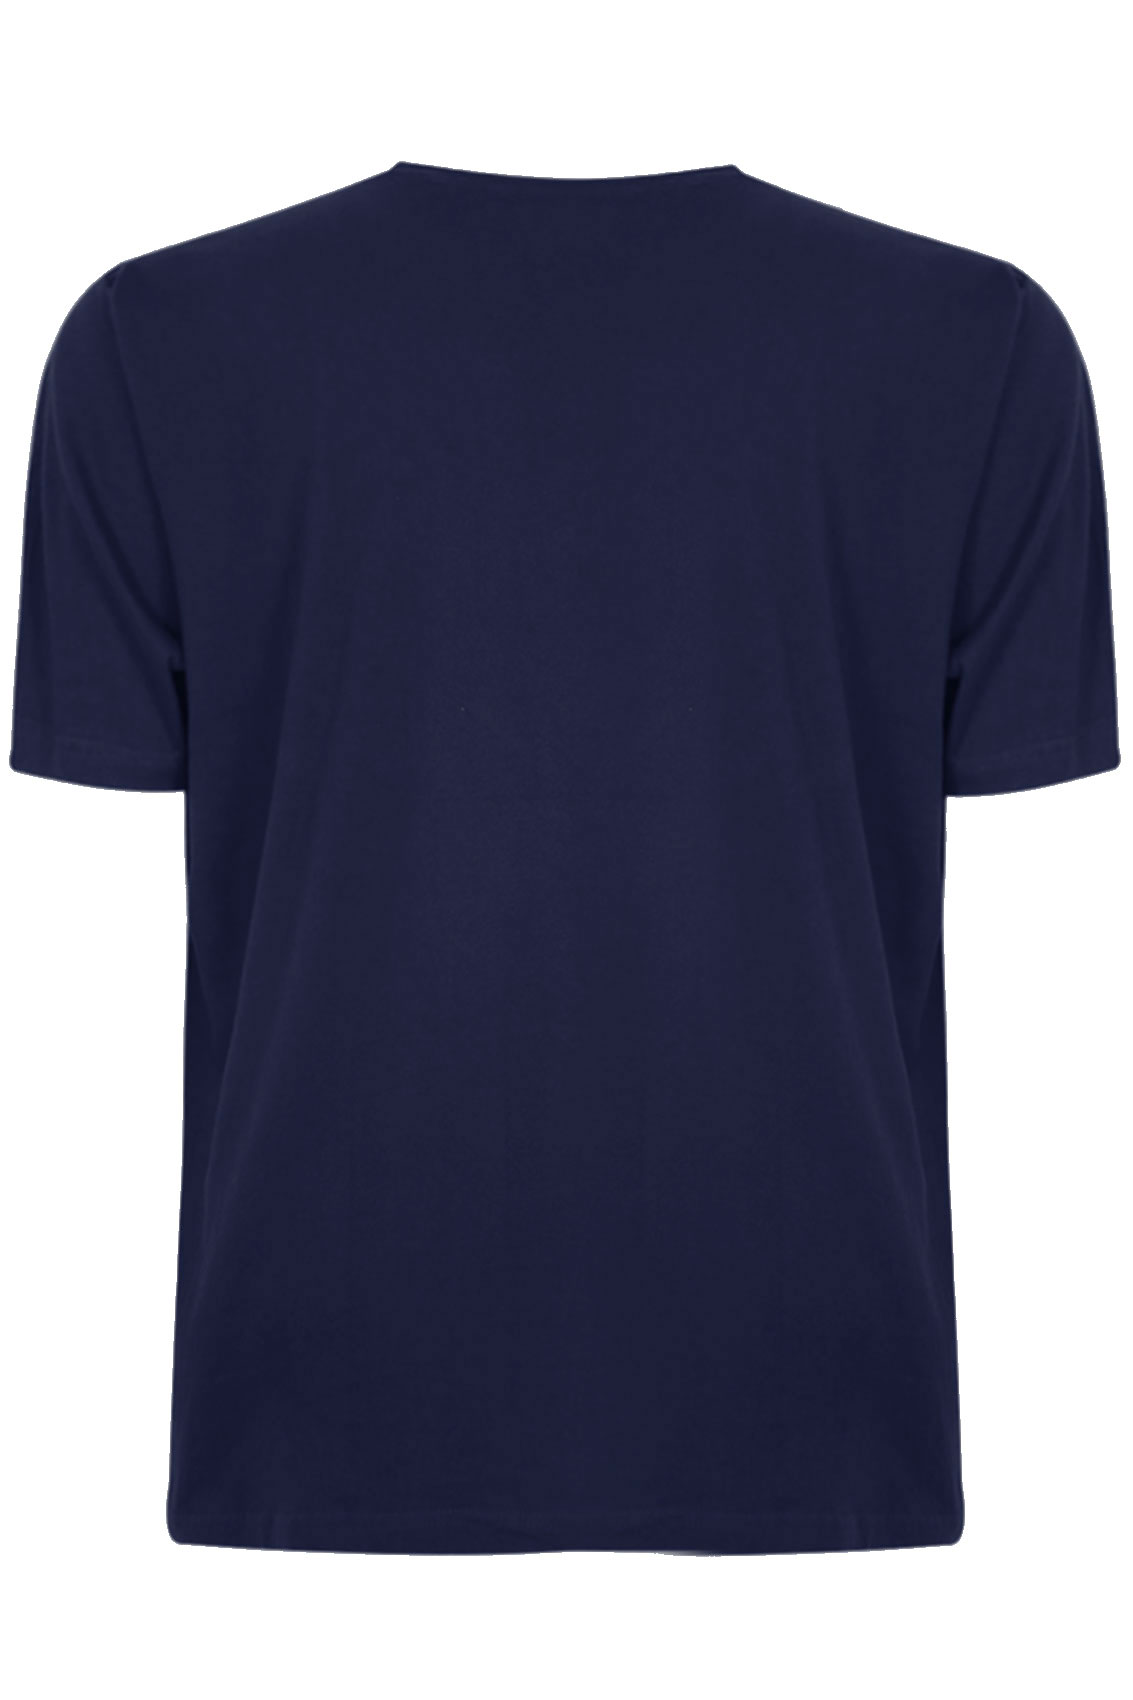 Download BadRhino Navy Basic Plain Crew Neck T-Shirt Extra large ...